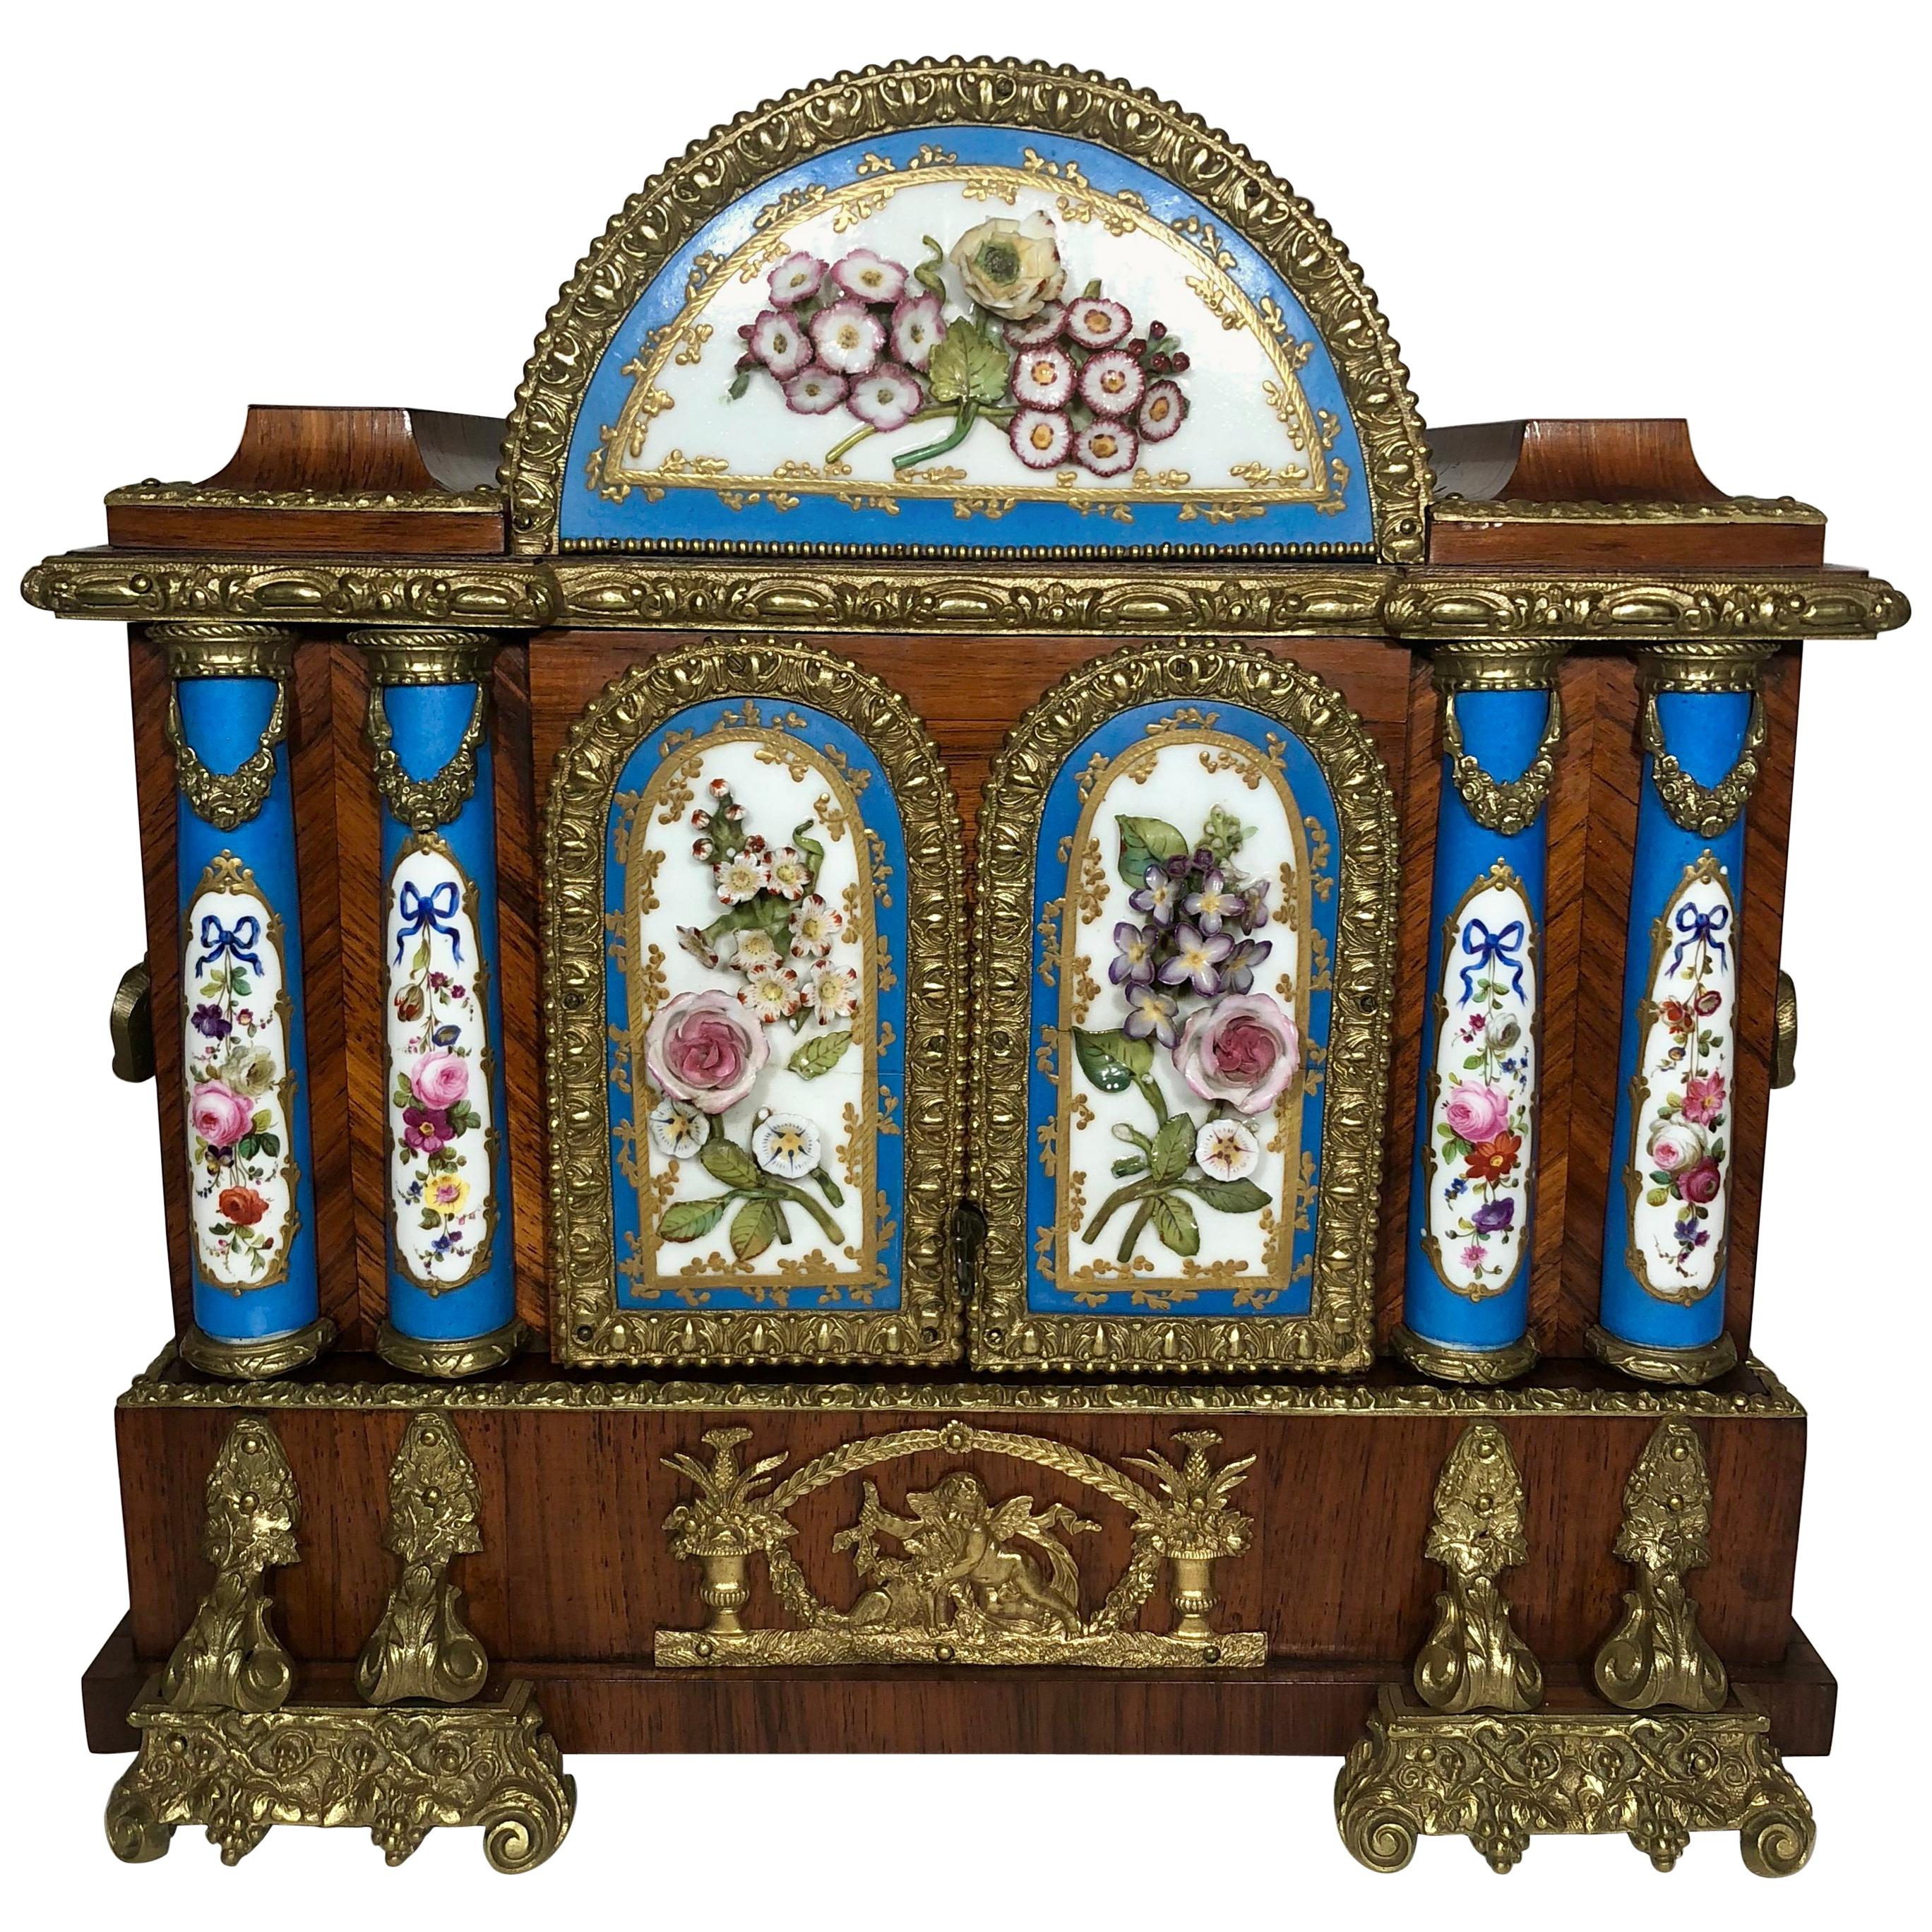 Antique French Jewel Box, circa 1885-1890